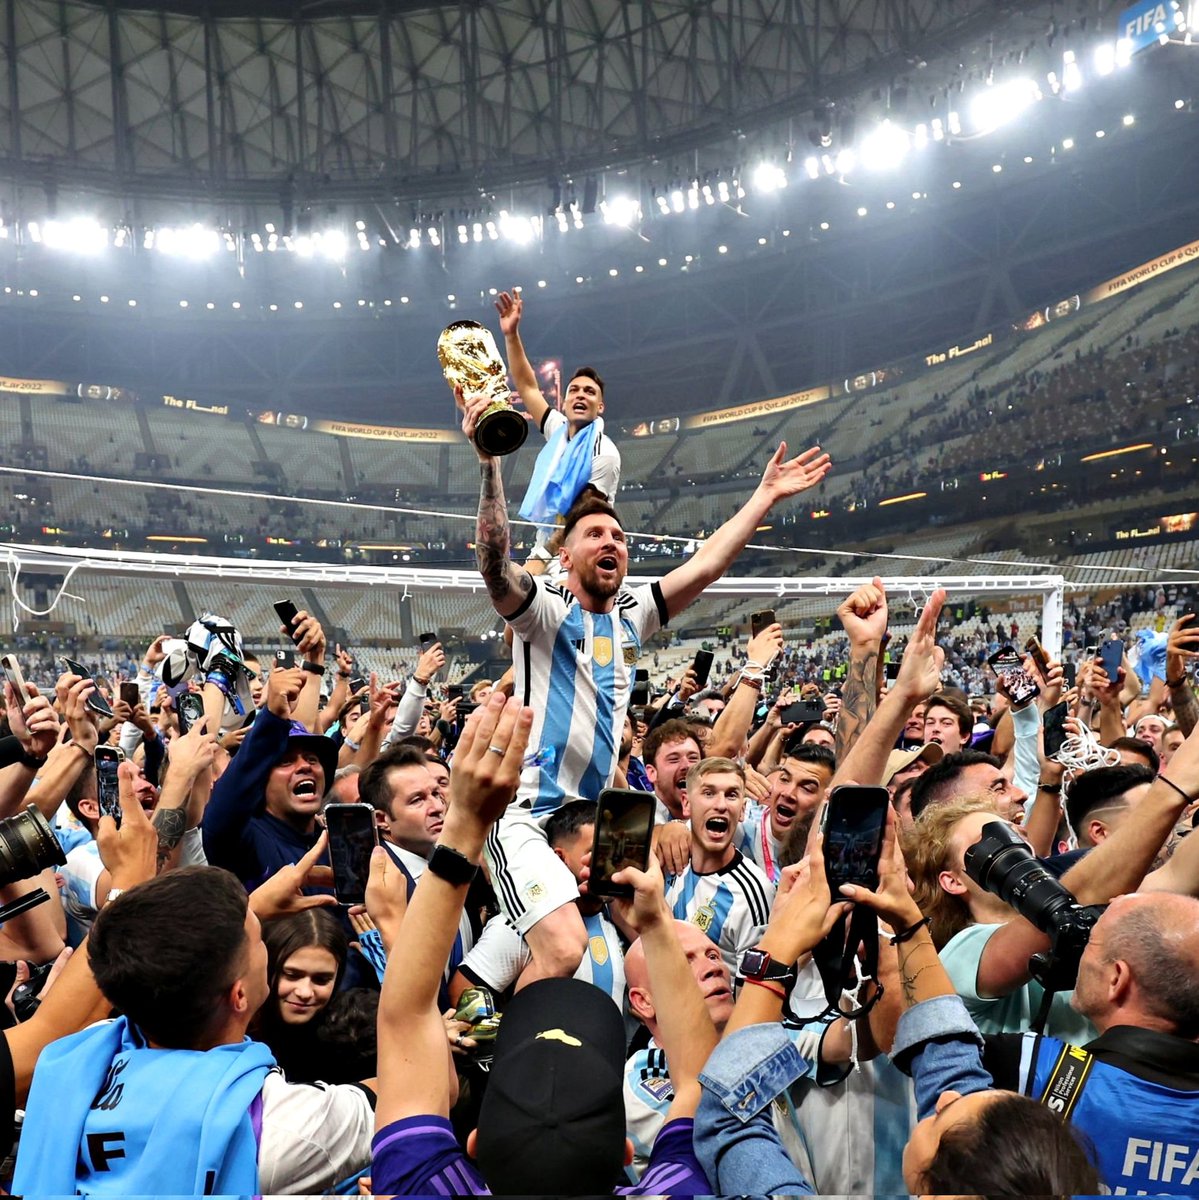 🐐 Lionel Messi, 36 yaşında!

1️⃣ Dünya Kupası 🇦🇷
4️⃣ Şampiyonlar Ligi 🇪🇺
3️⃣ UEFA Süper Kupa 🇪🇺 
🔟 La Liga 🇪🇸
7️⃣ İspanya Kral Kupası 🇪🇸
8️⃣ İspanya Süper Kupası 🇪🇸
2️⃣ Ligue 1 🇫🇷
1️⃣ Fransa Süper Kupa 🇫🇷
1️⃣ Copa America 🇦🇷
1️⃣ Finalissima 🇦🇷
7️⃣ Ballon D'or
3️⃣ FIFA the Best

#Messi𓃵